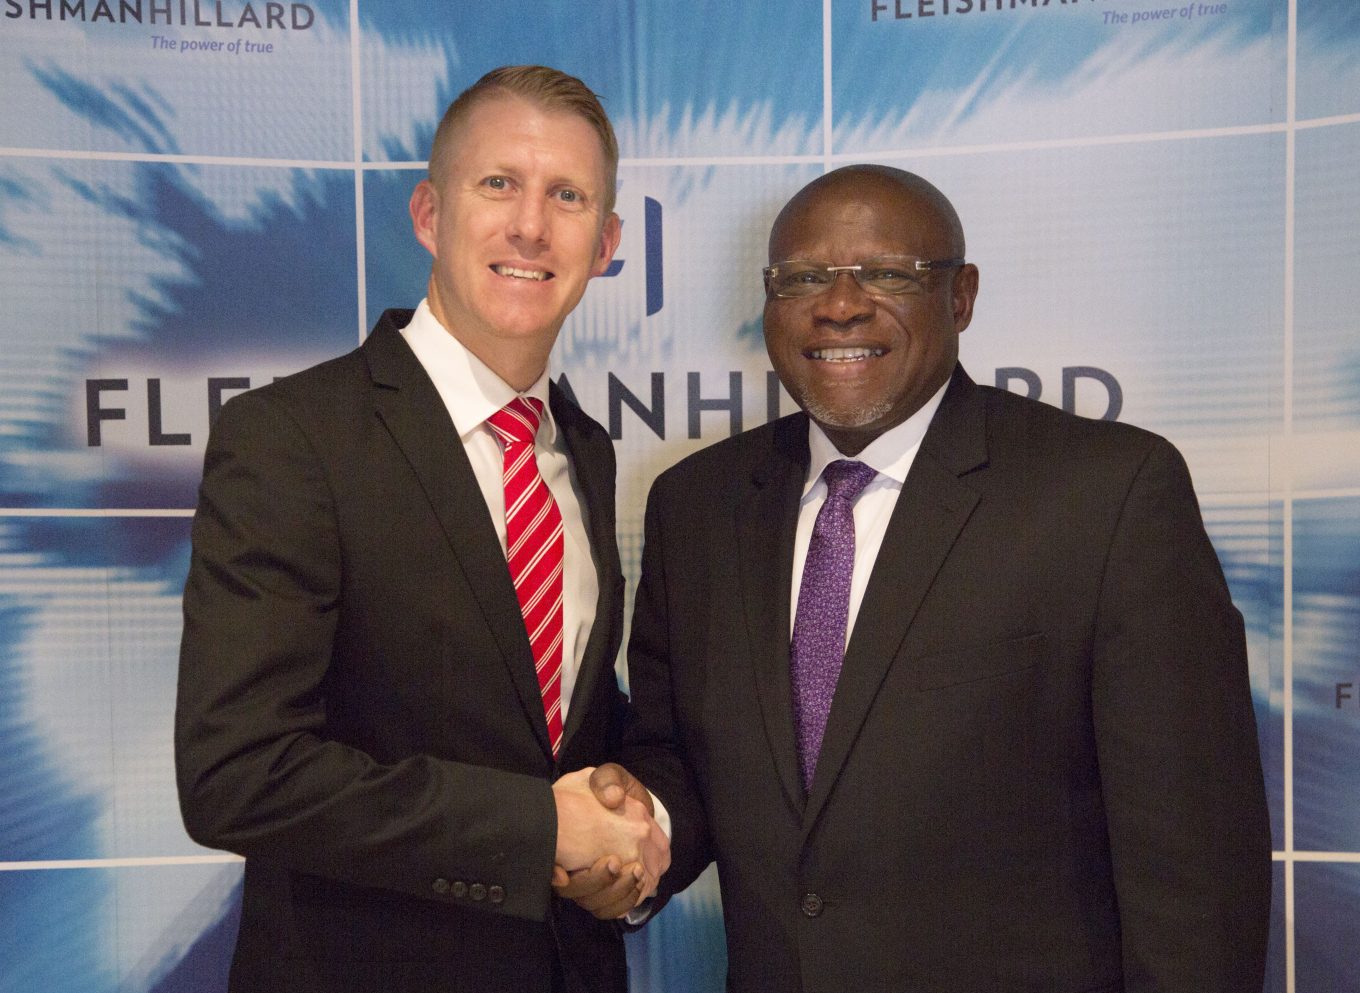 Kevin Welman, Managing Director of FleishmanHillard (left) John Ehiguese, CEO of Mediacraft (Right)